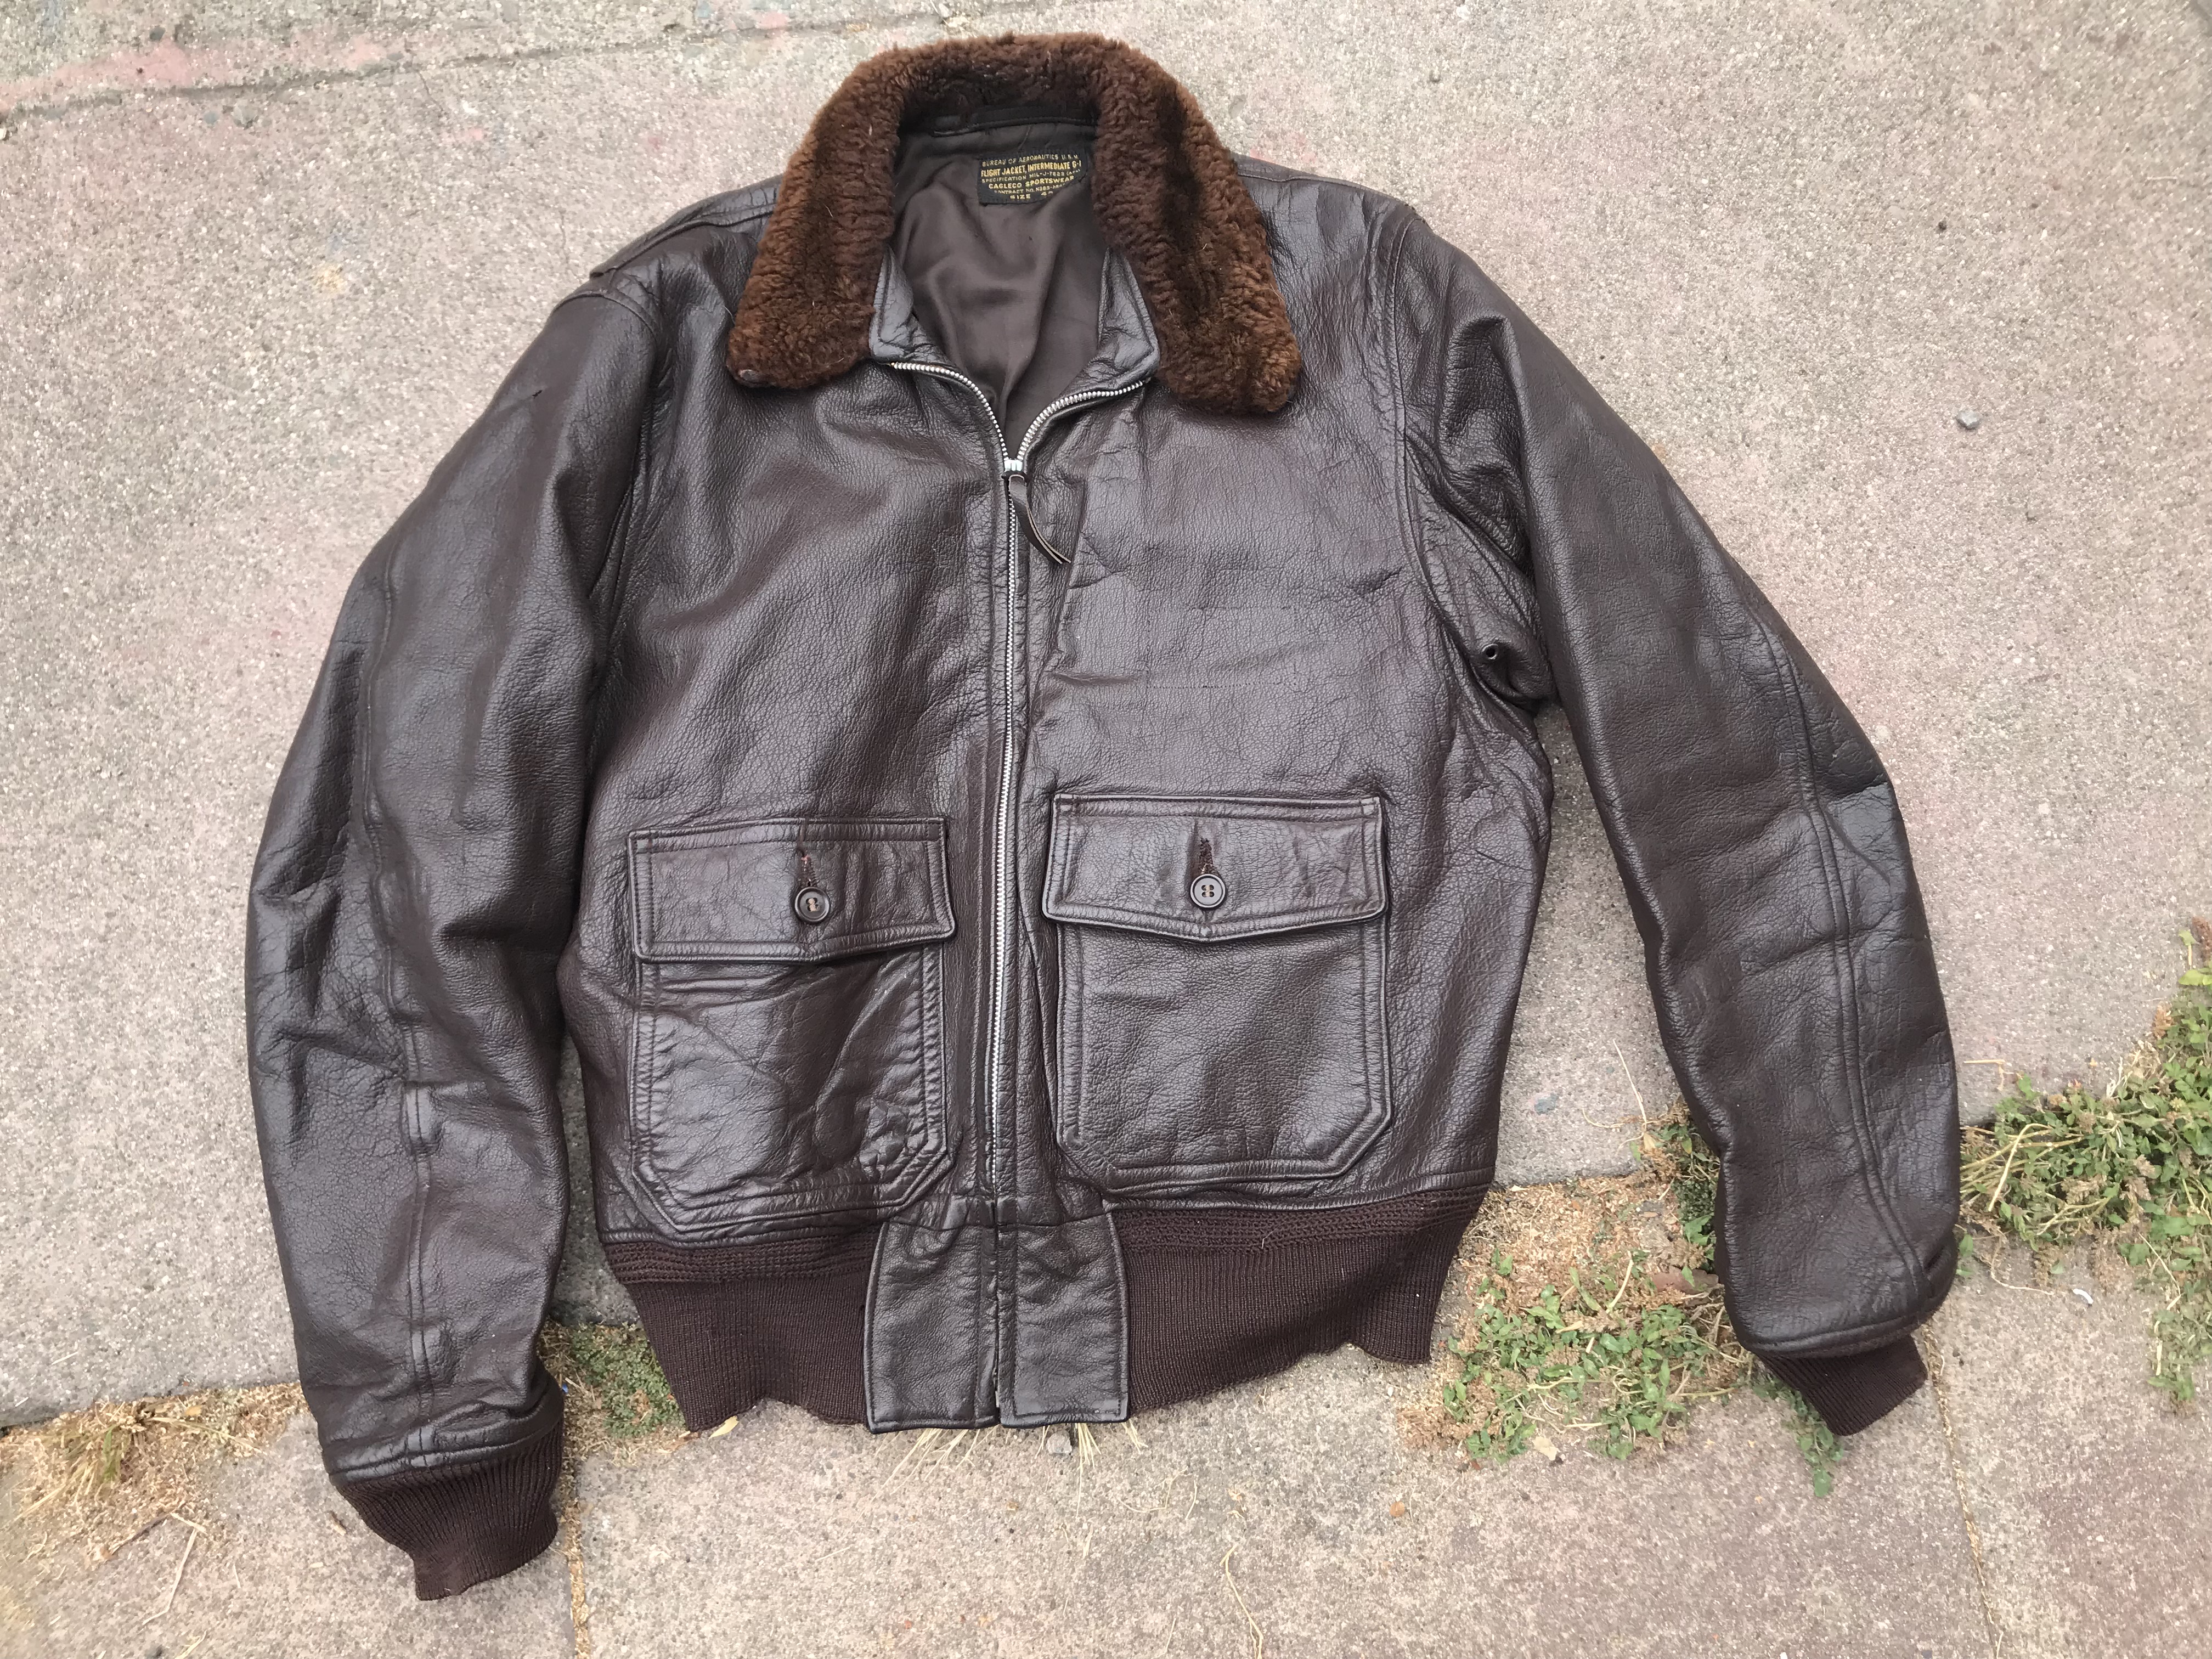 Eastman G-1 jacket | Page 2 | Vintage Leather Jackets Forum